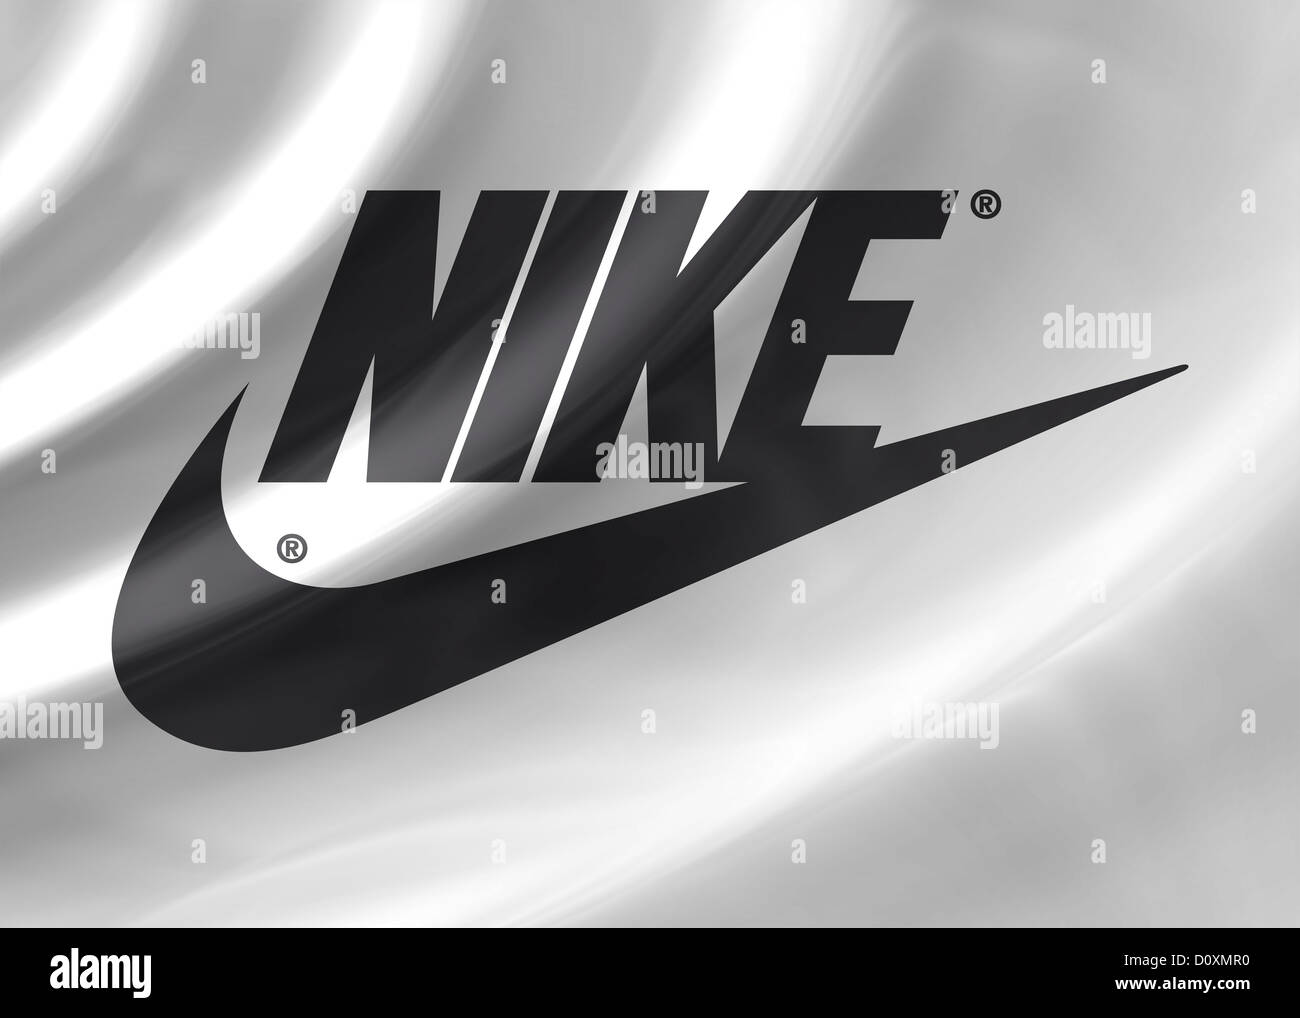 Nike logo symbol flag icon logotype Stock Photo - Alamy